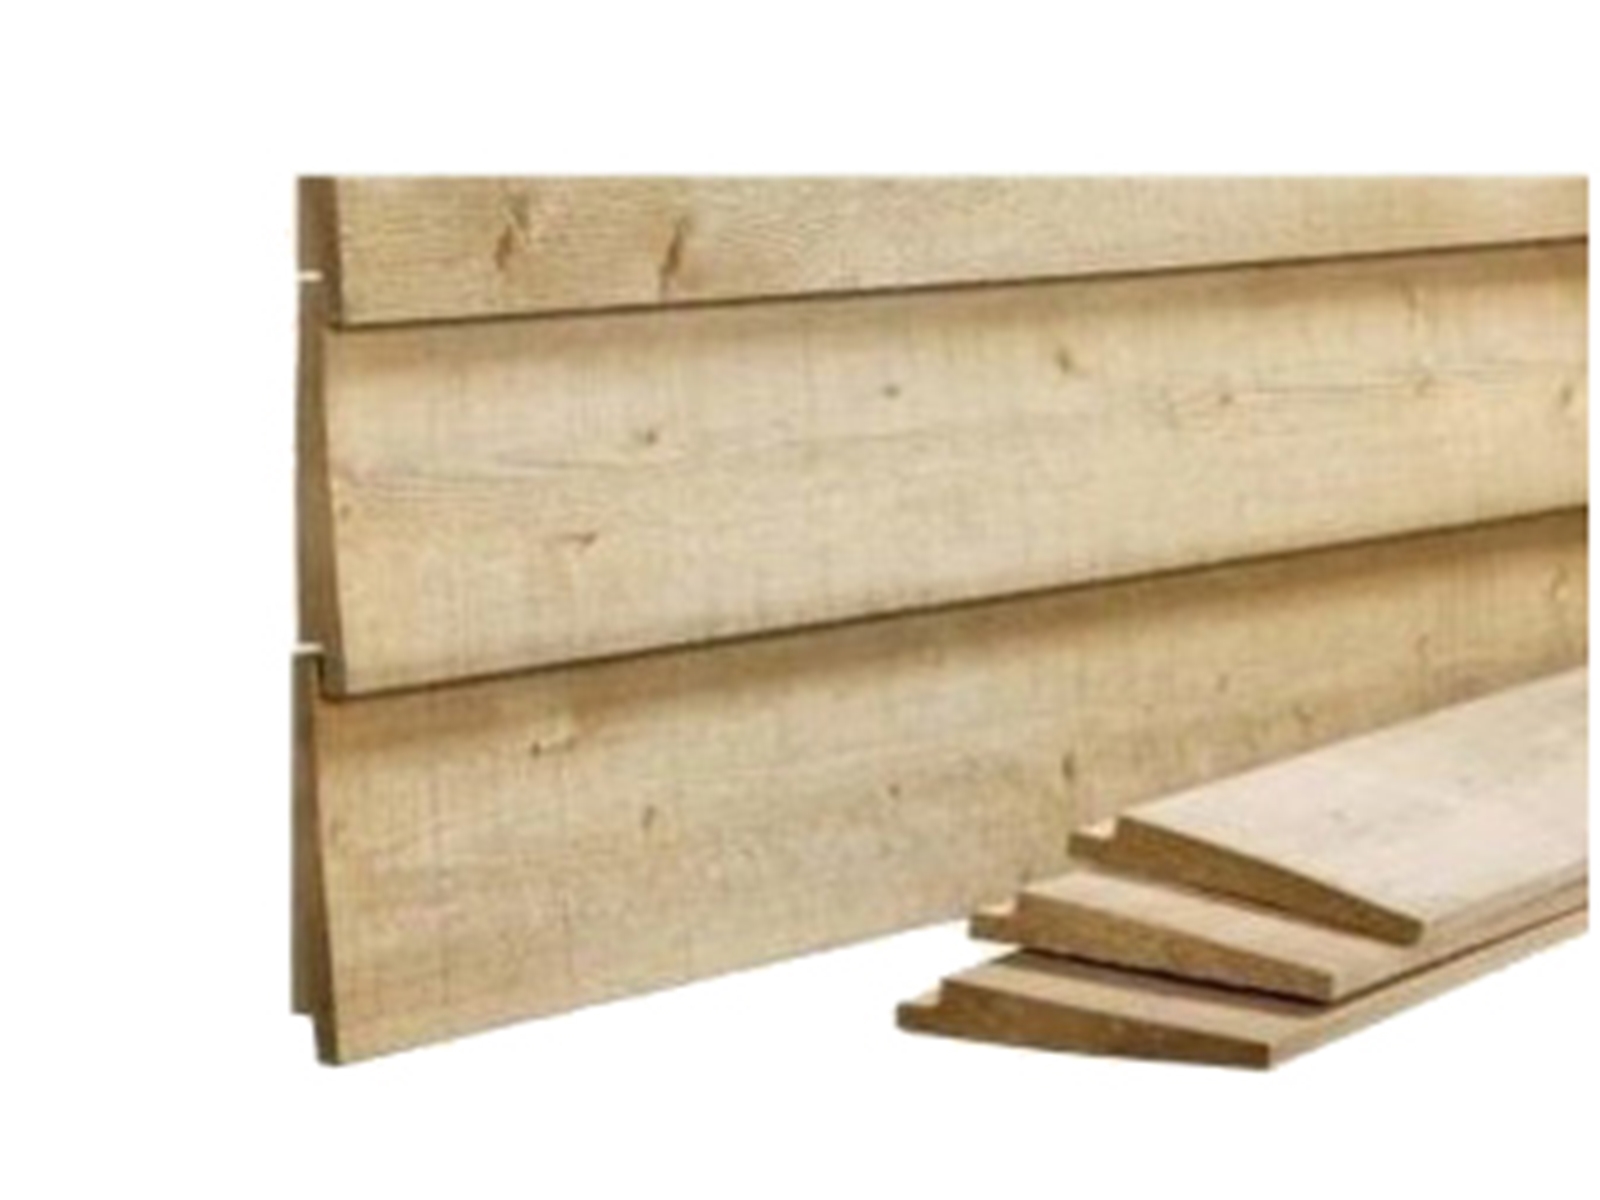 NE-vuren Zweeds rabat houten plank, 10/25x195mm, fijnbezaagd, geïmpregneerd